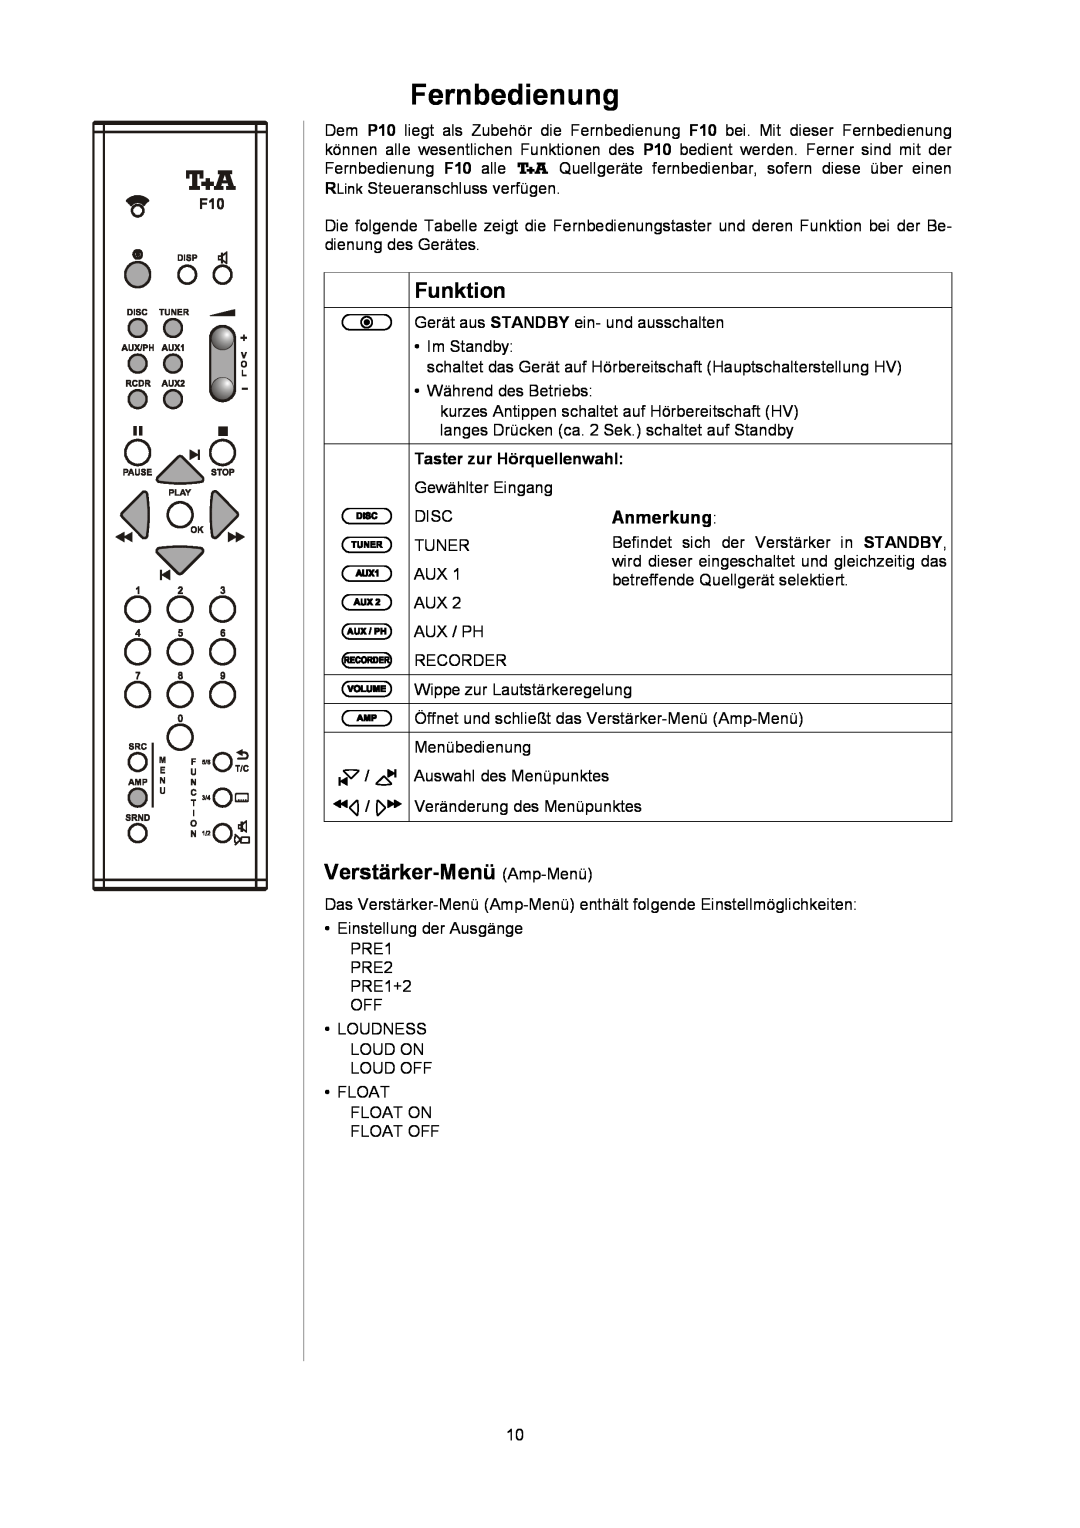 T+A Elektroakustik P 10 user manual Fernbedienung, Funktion, VerstärkerMenü AmpMenü, / , /  